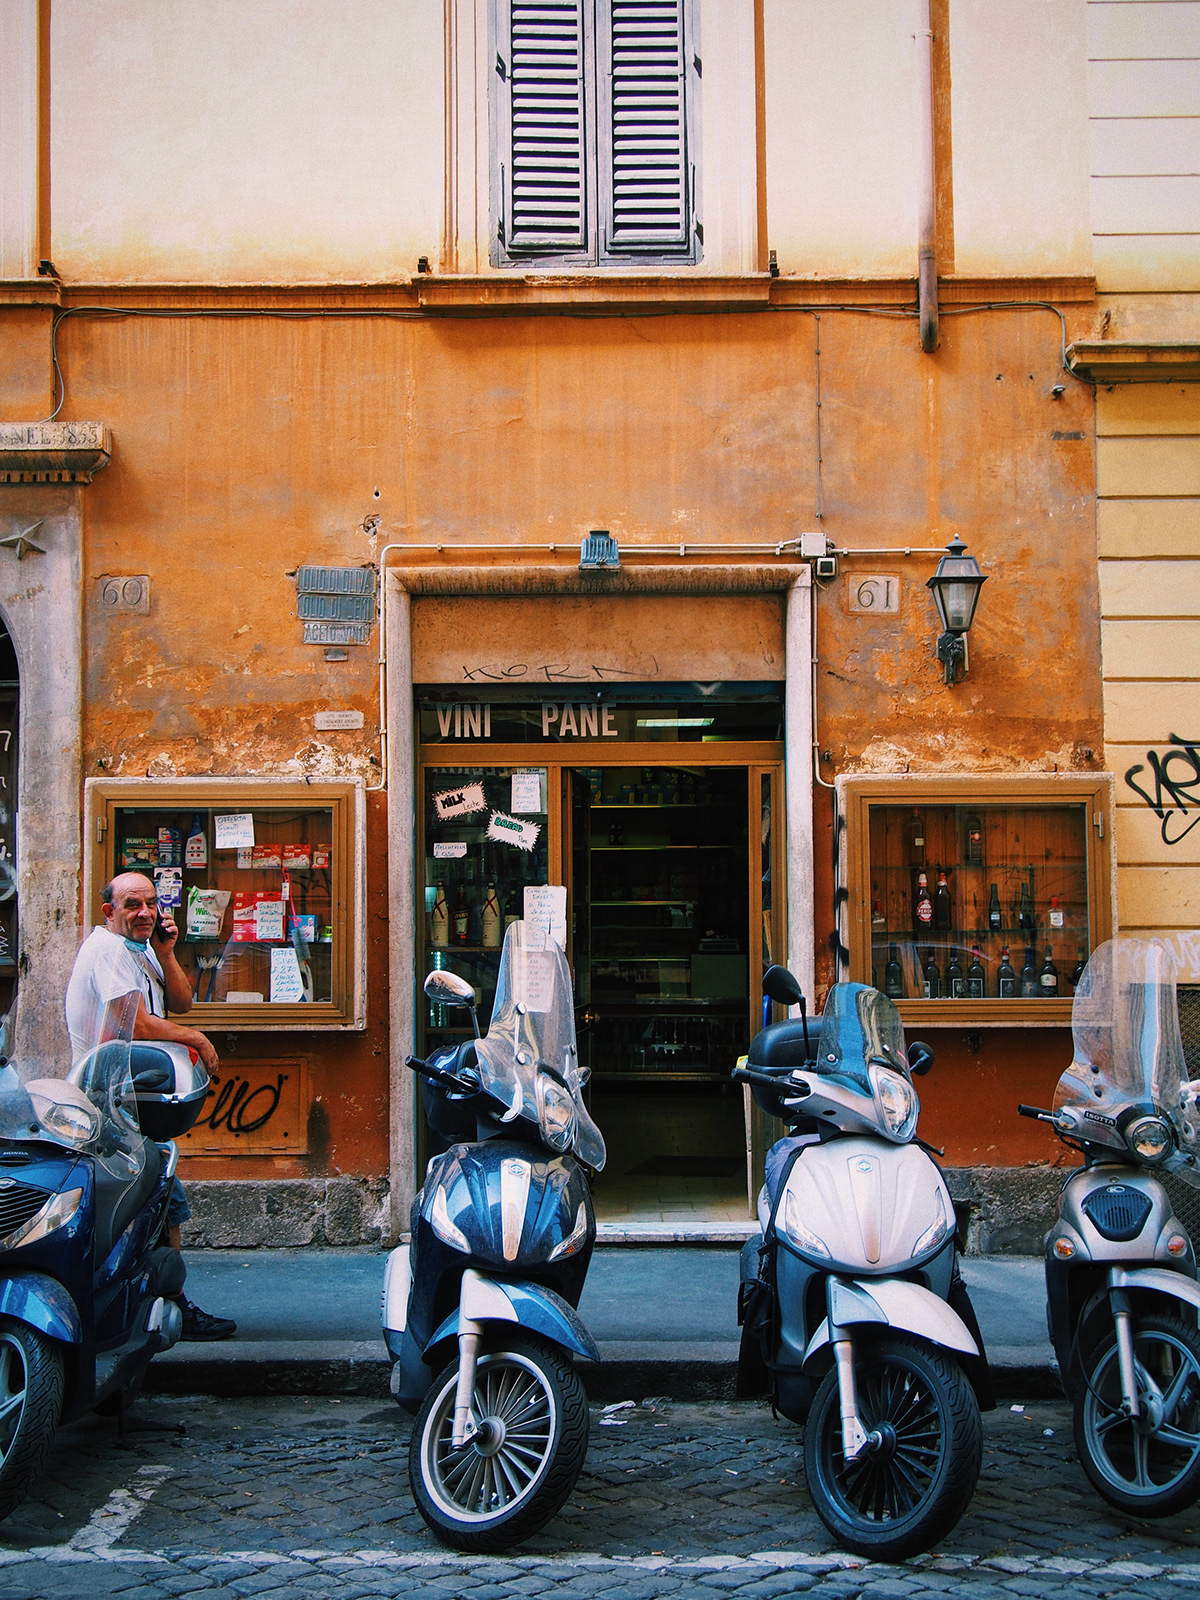 Vini e pane in the streets of Trastevere, Rome 